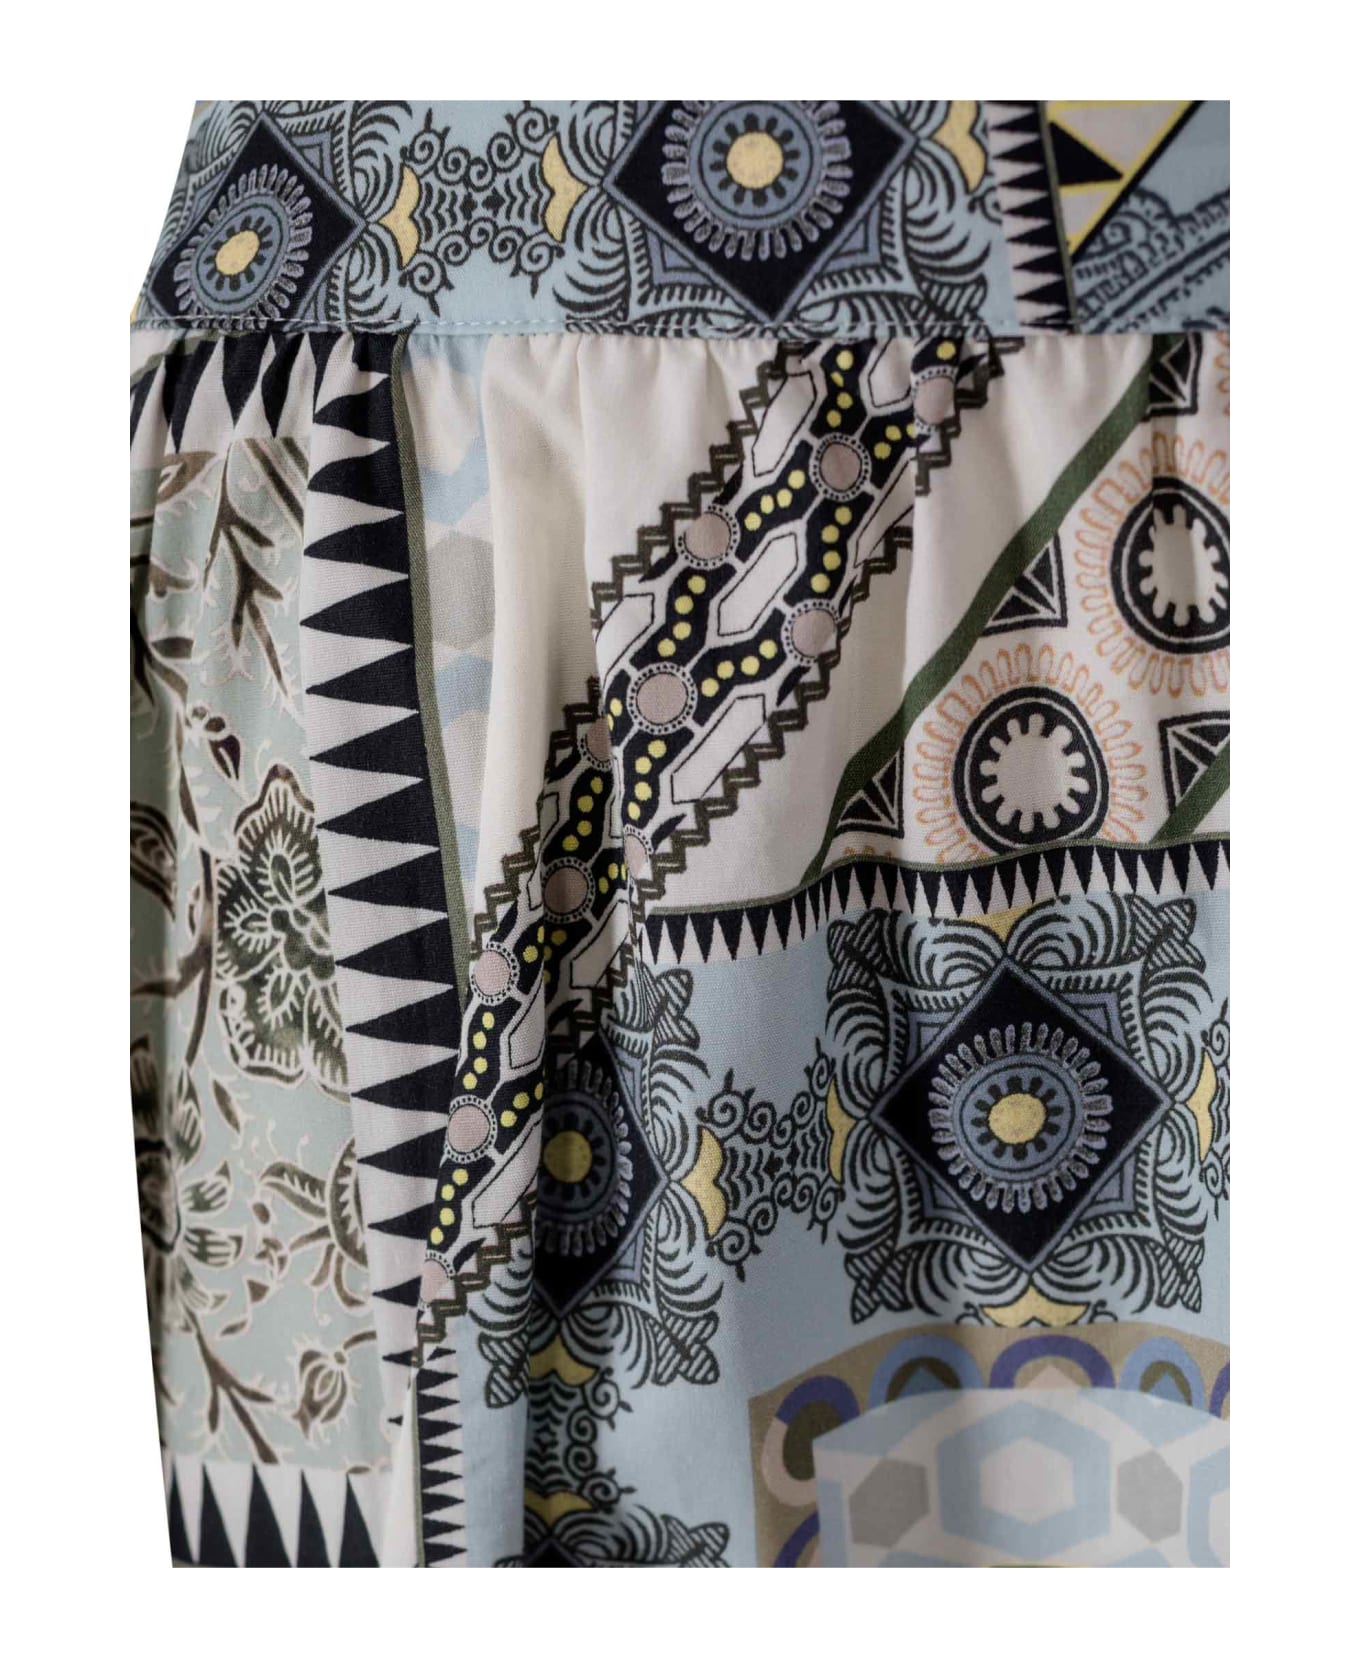 Etro Geometric Print Cotton Skirt スカート